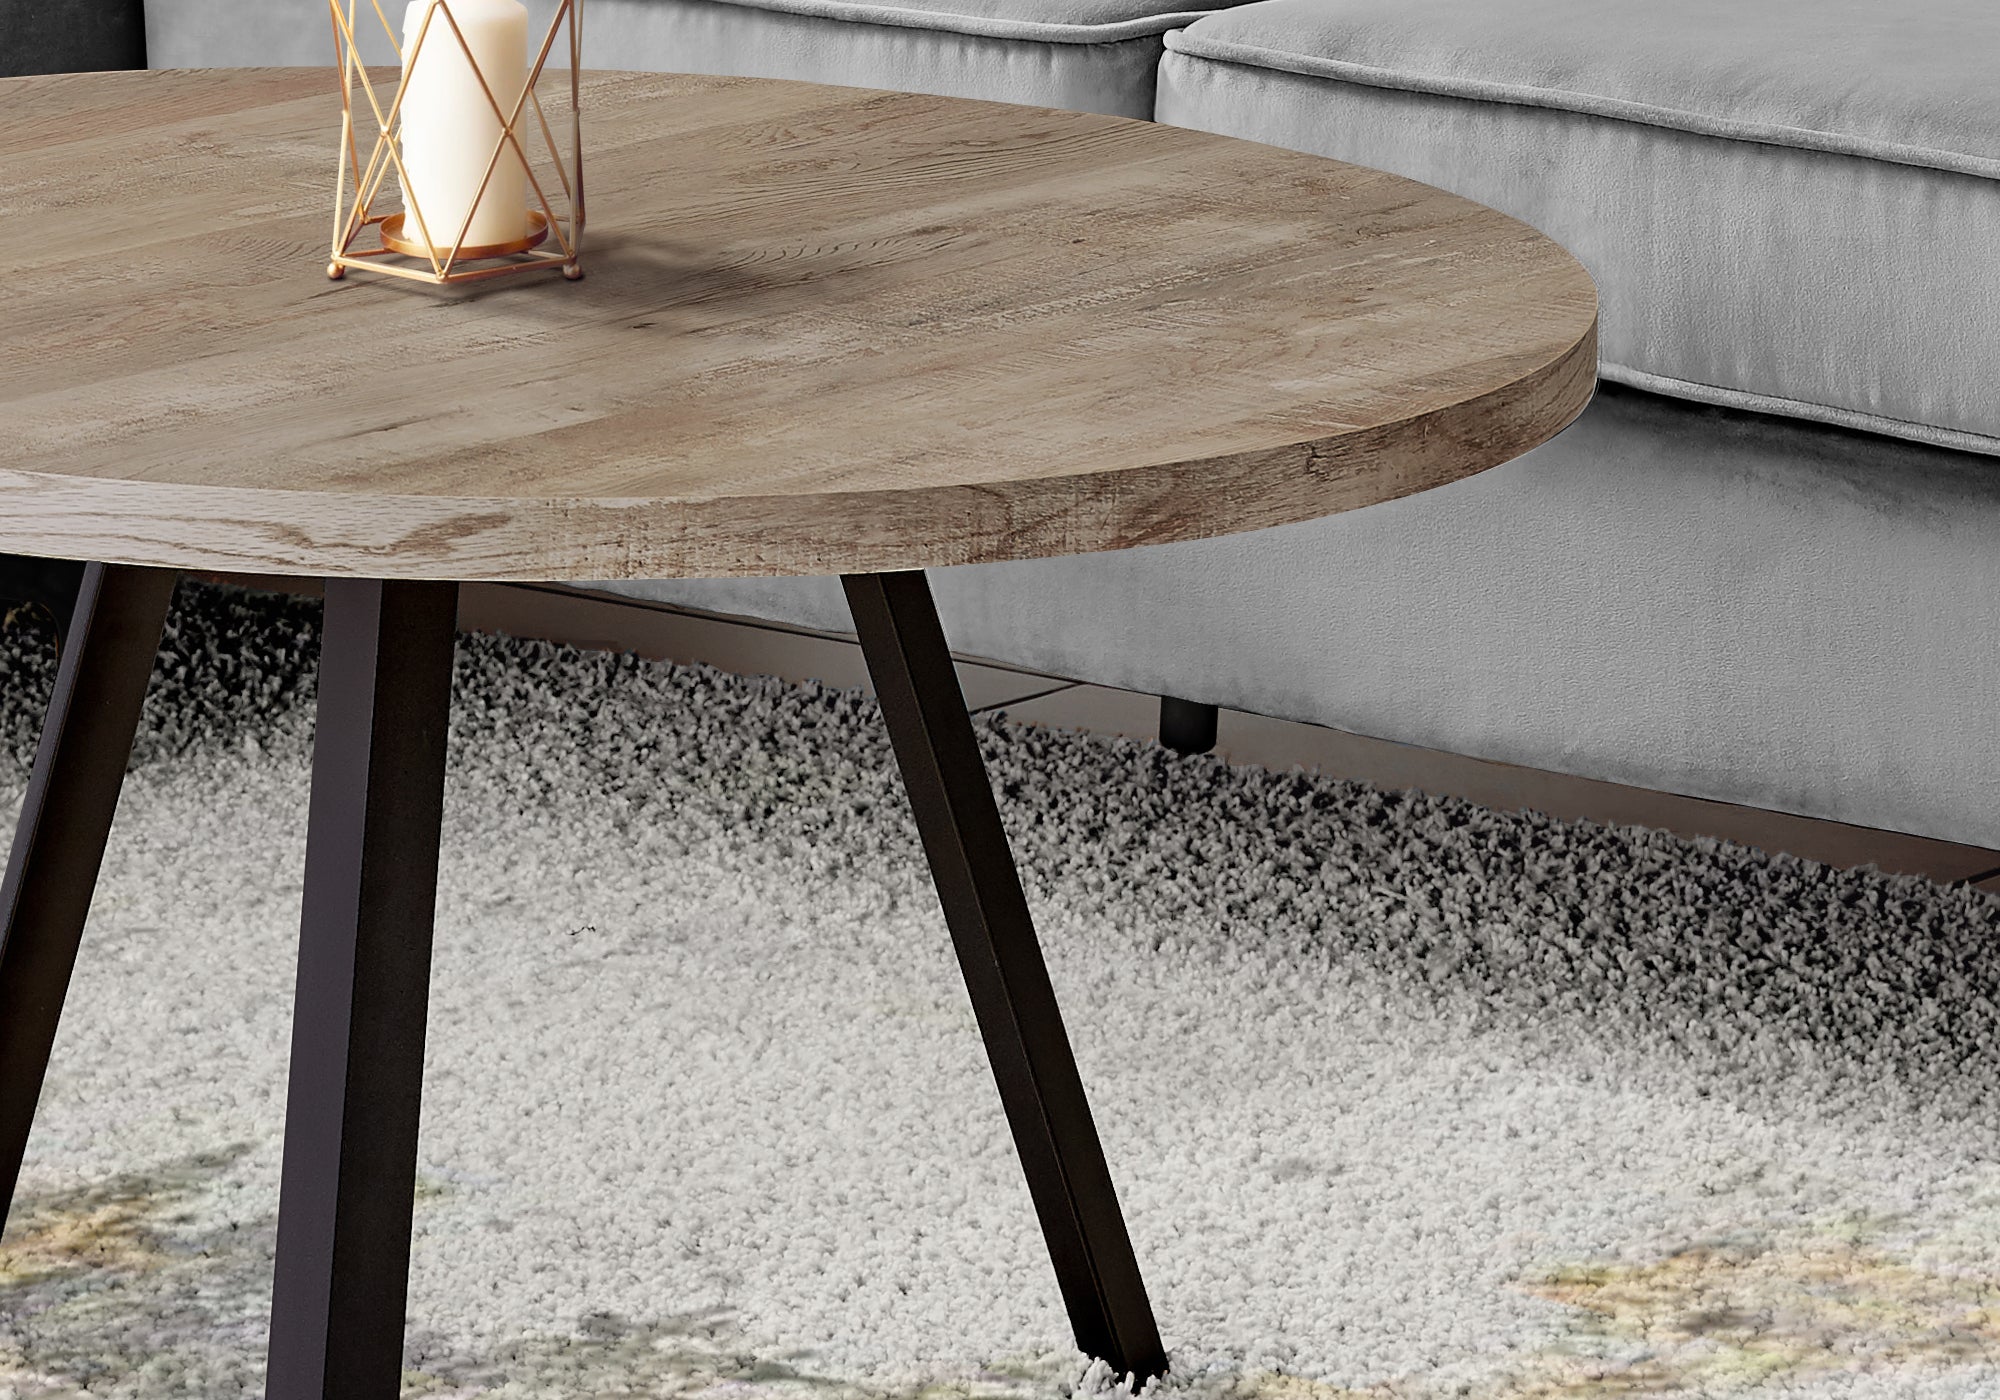 Coffee Table - 36Dia/ Taupe Reclaimed Wood / Black Metal